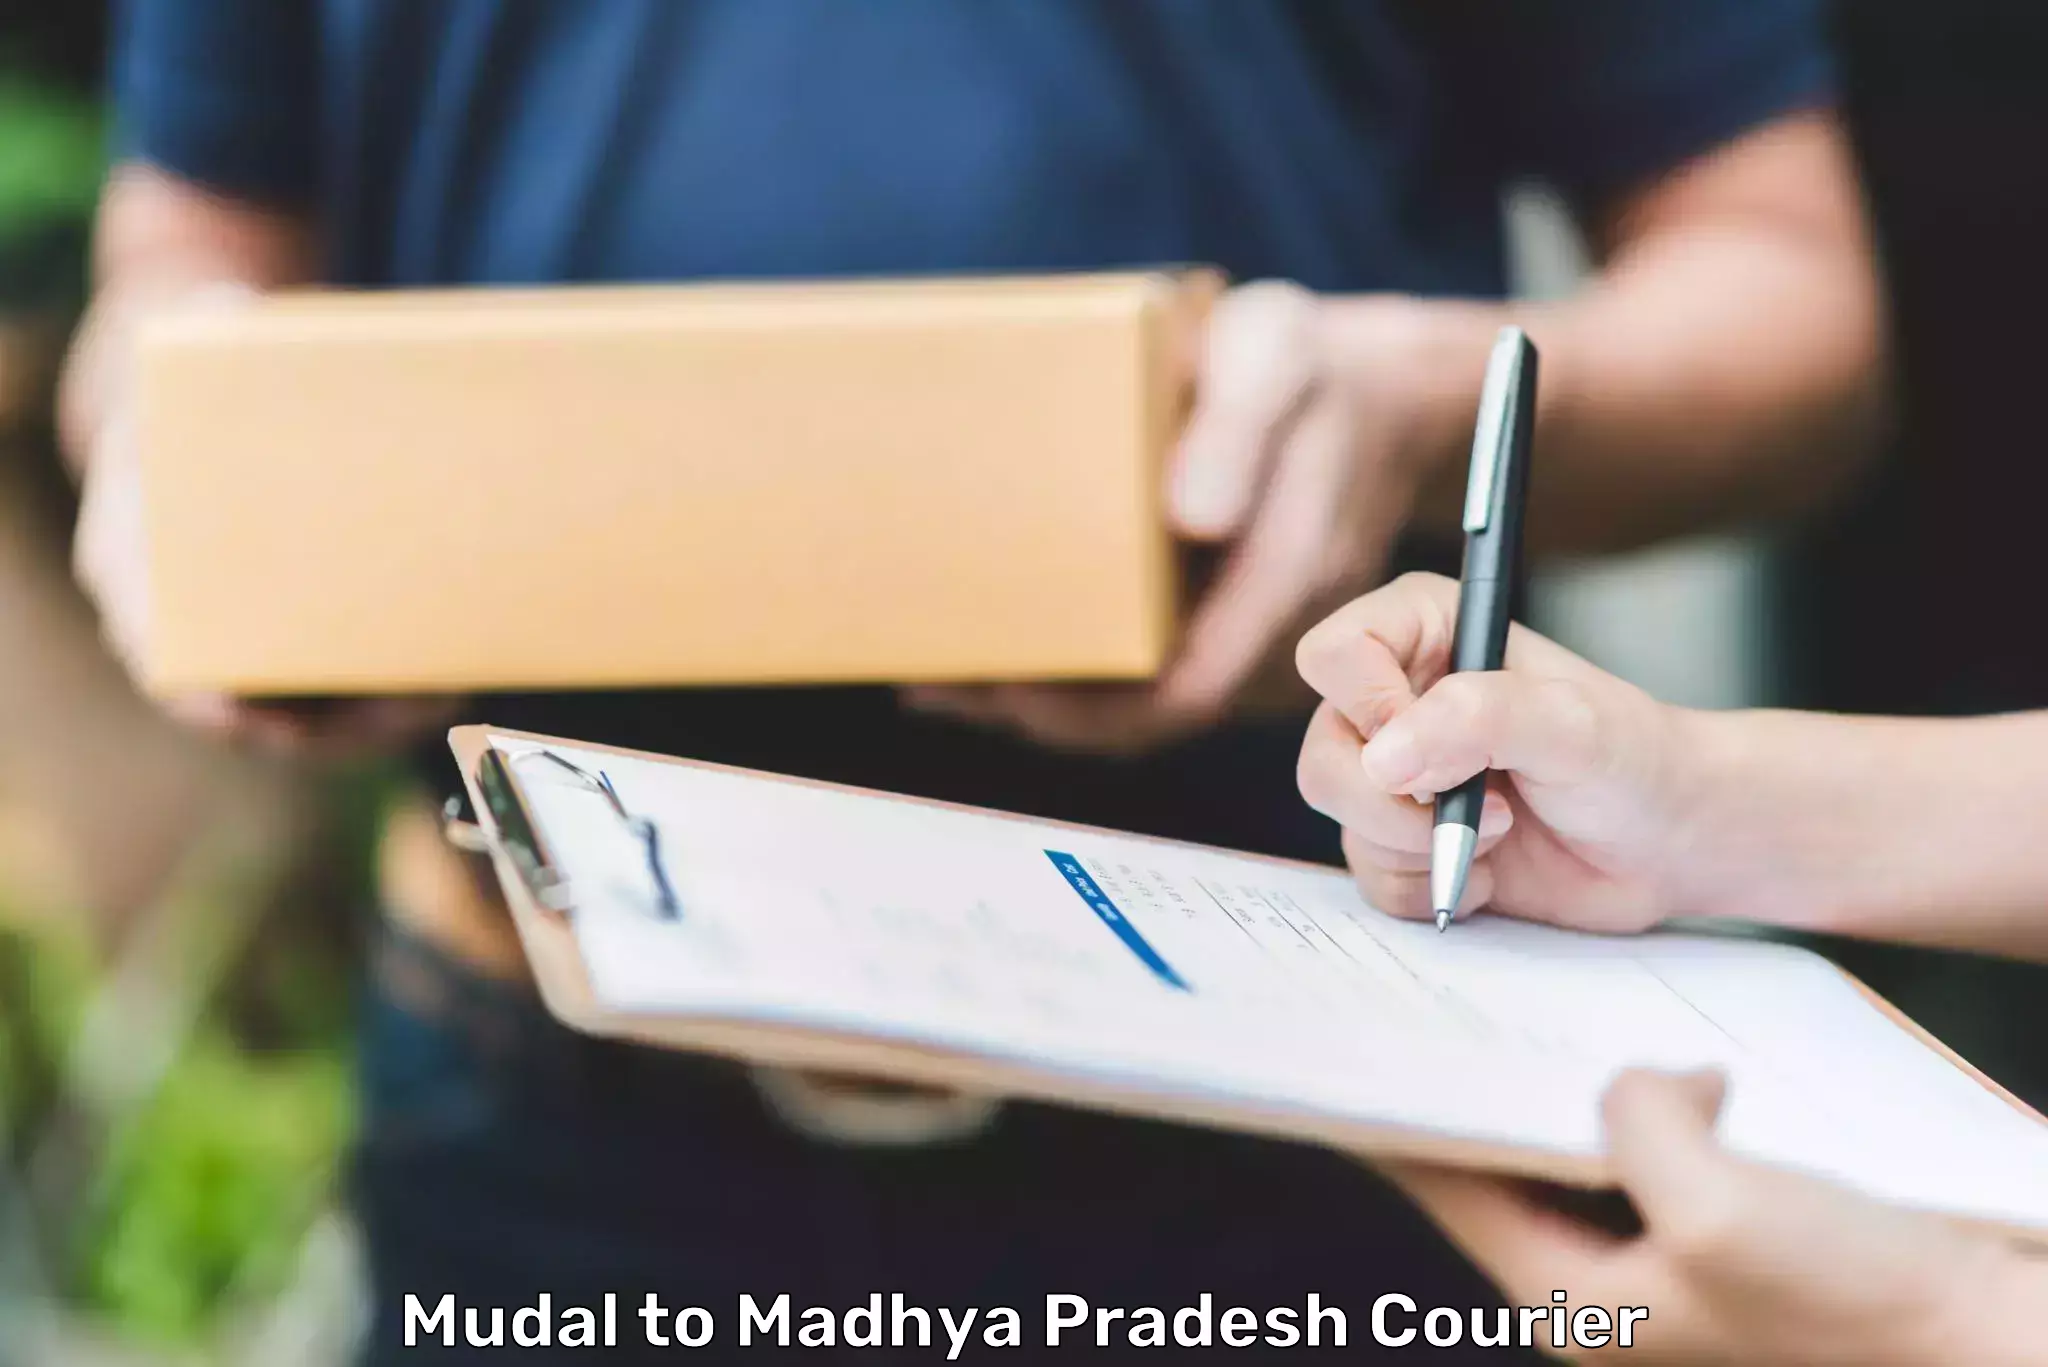 High-capacity parcel service Mudal to Madhya Pradesh